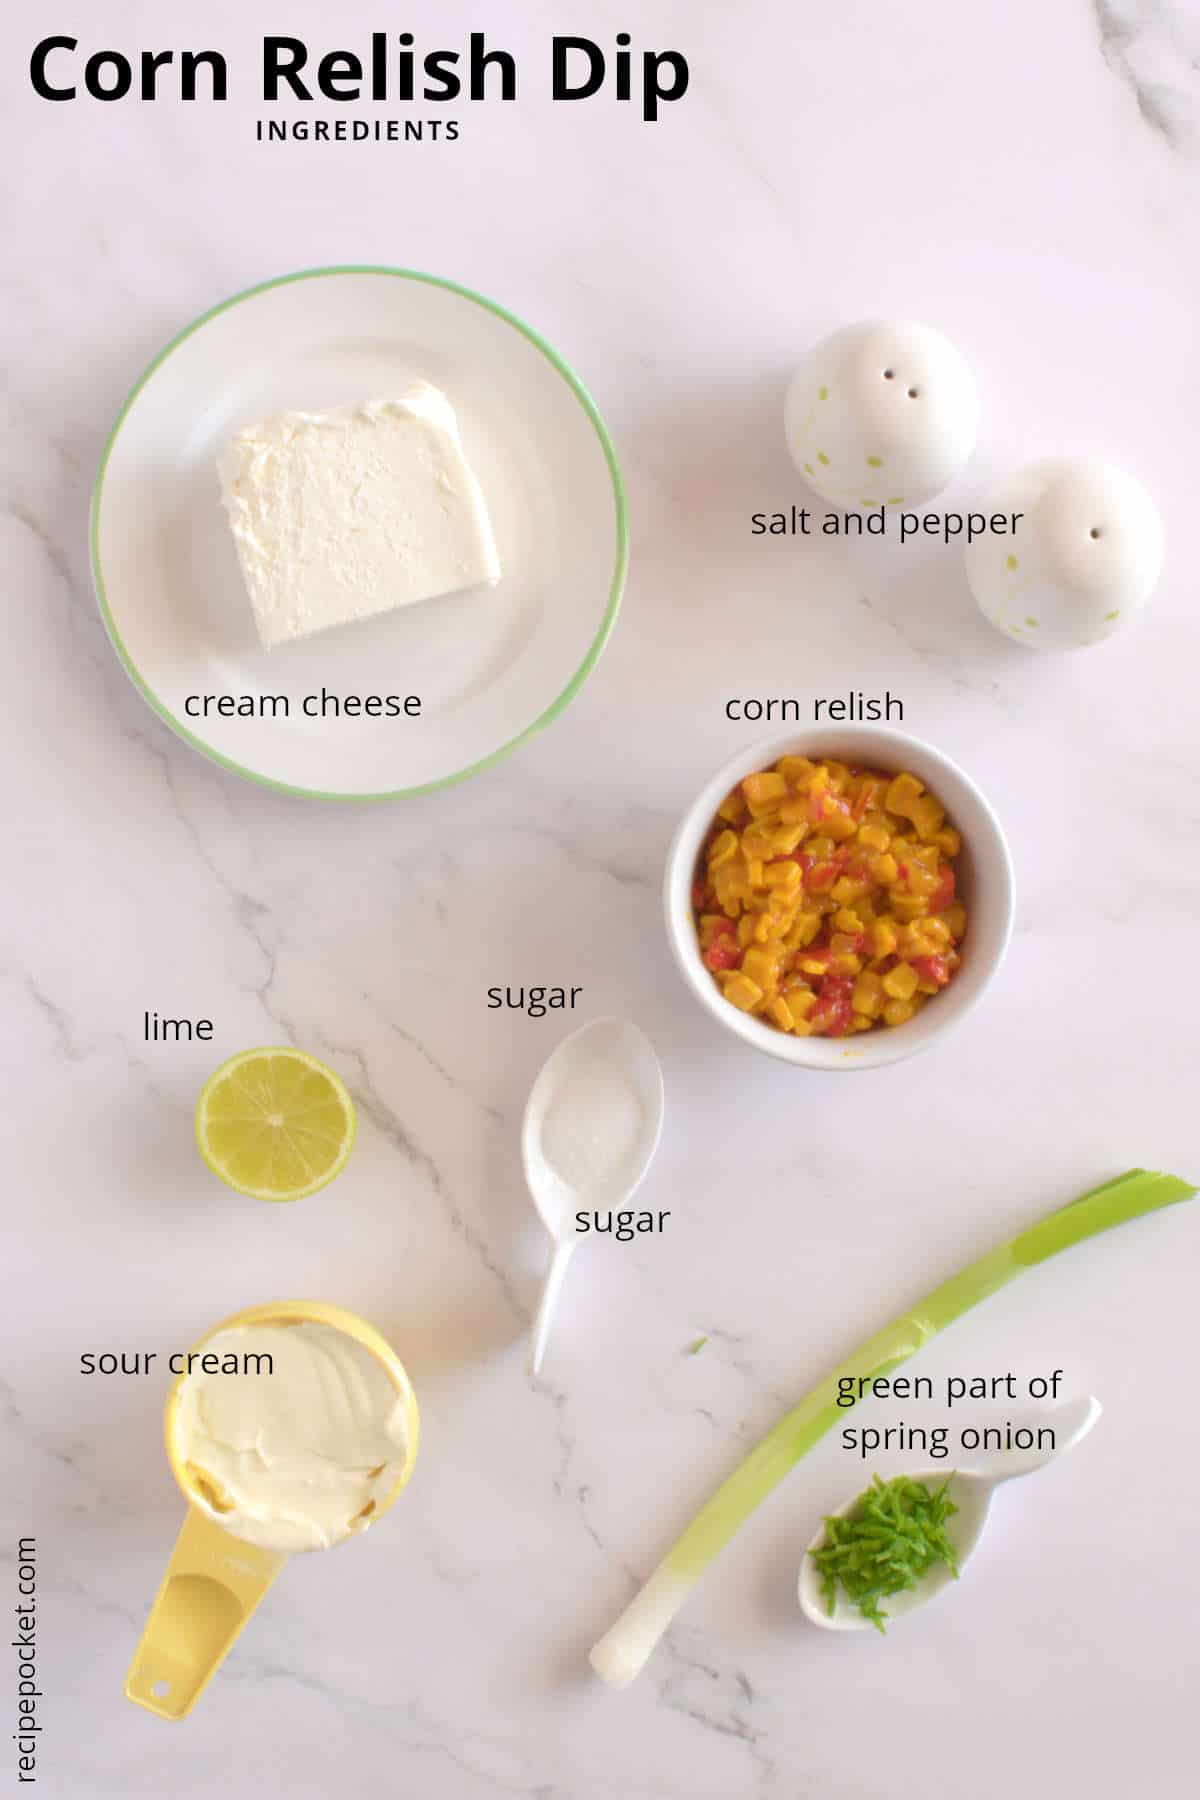 Image of ingredients for corn relish dip.